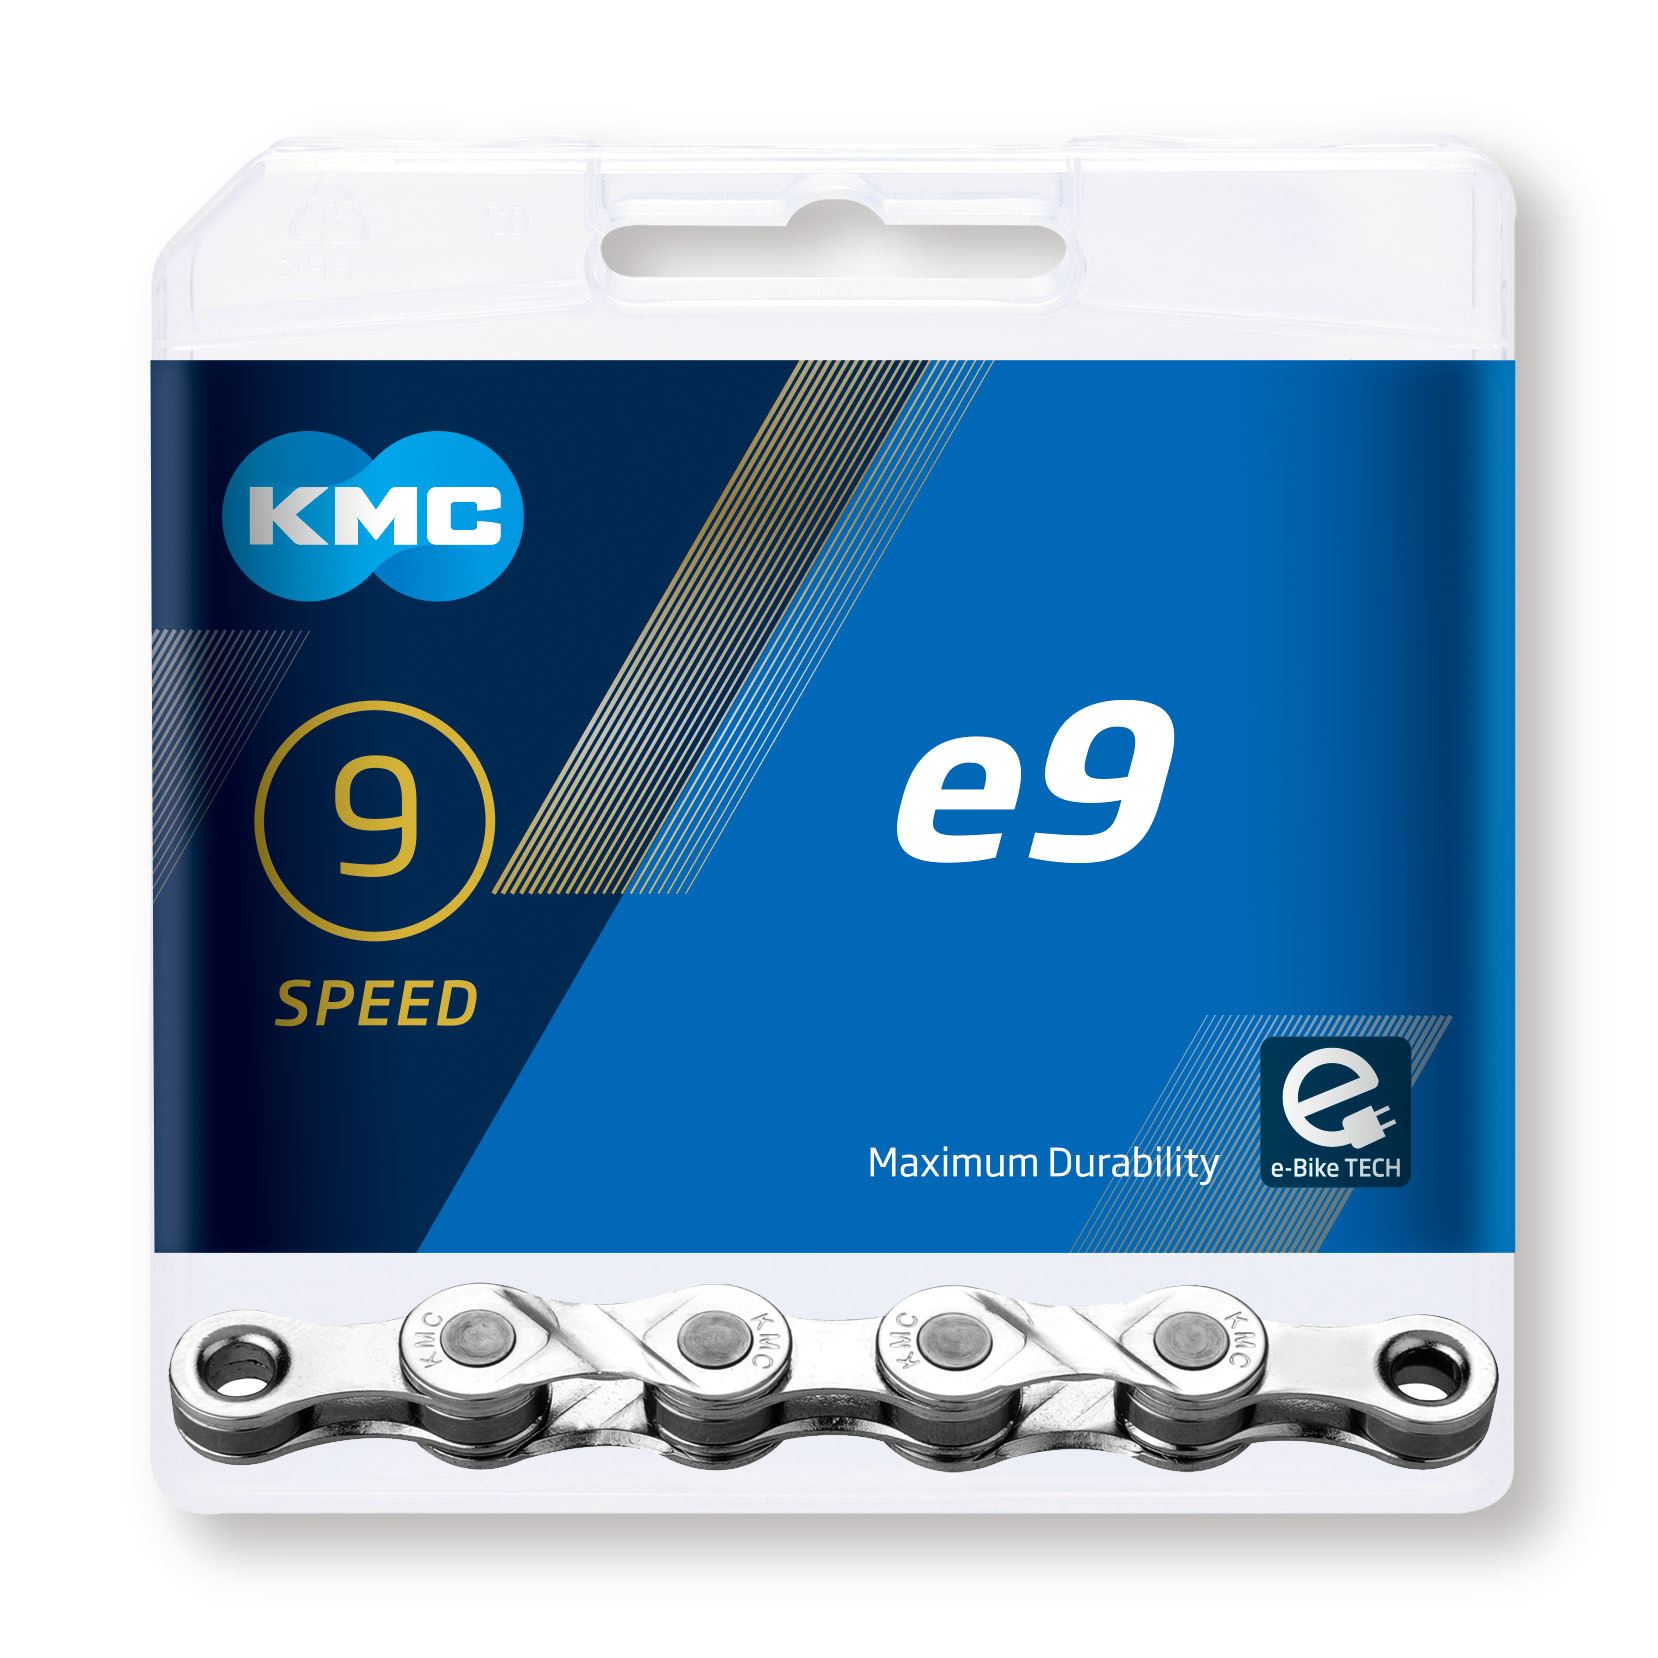 Reťaz KMC e9 Silver pre elektrobicykle, 9 Speed